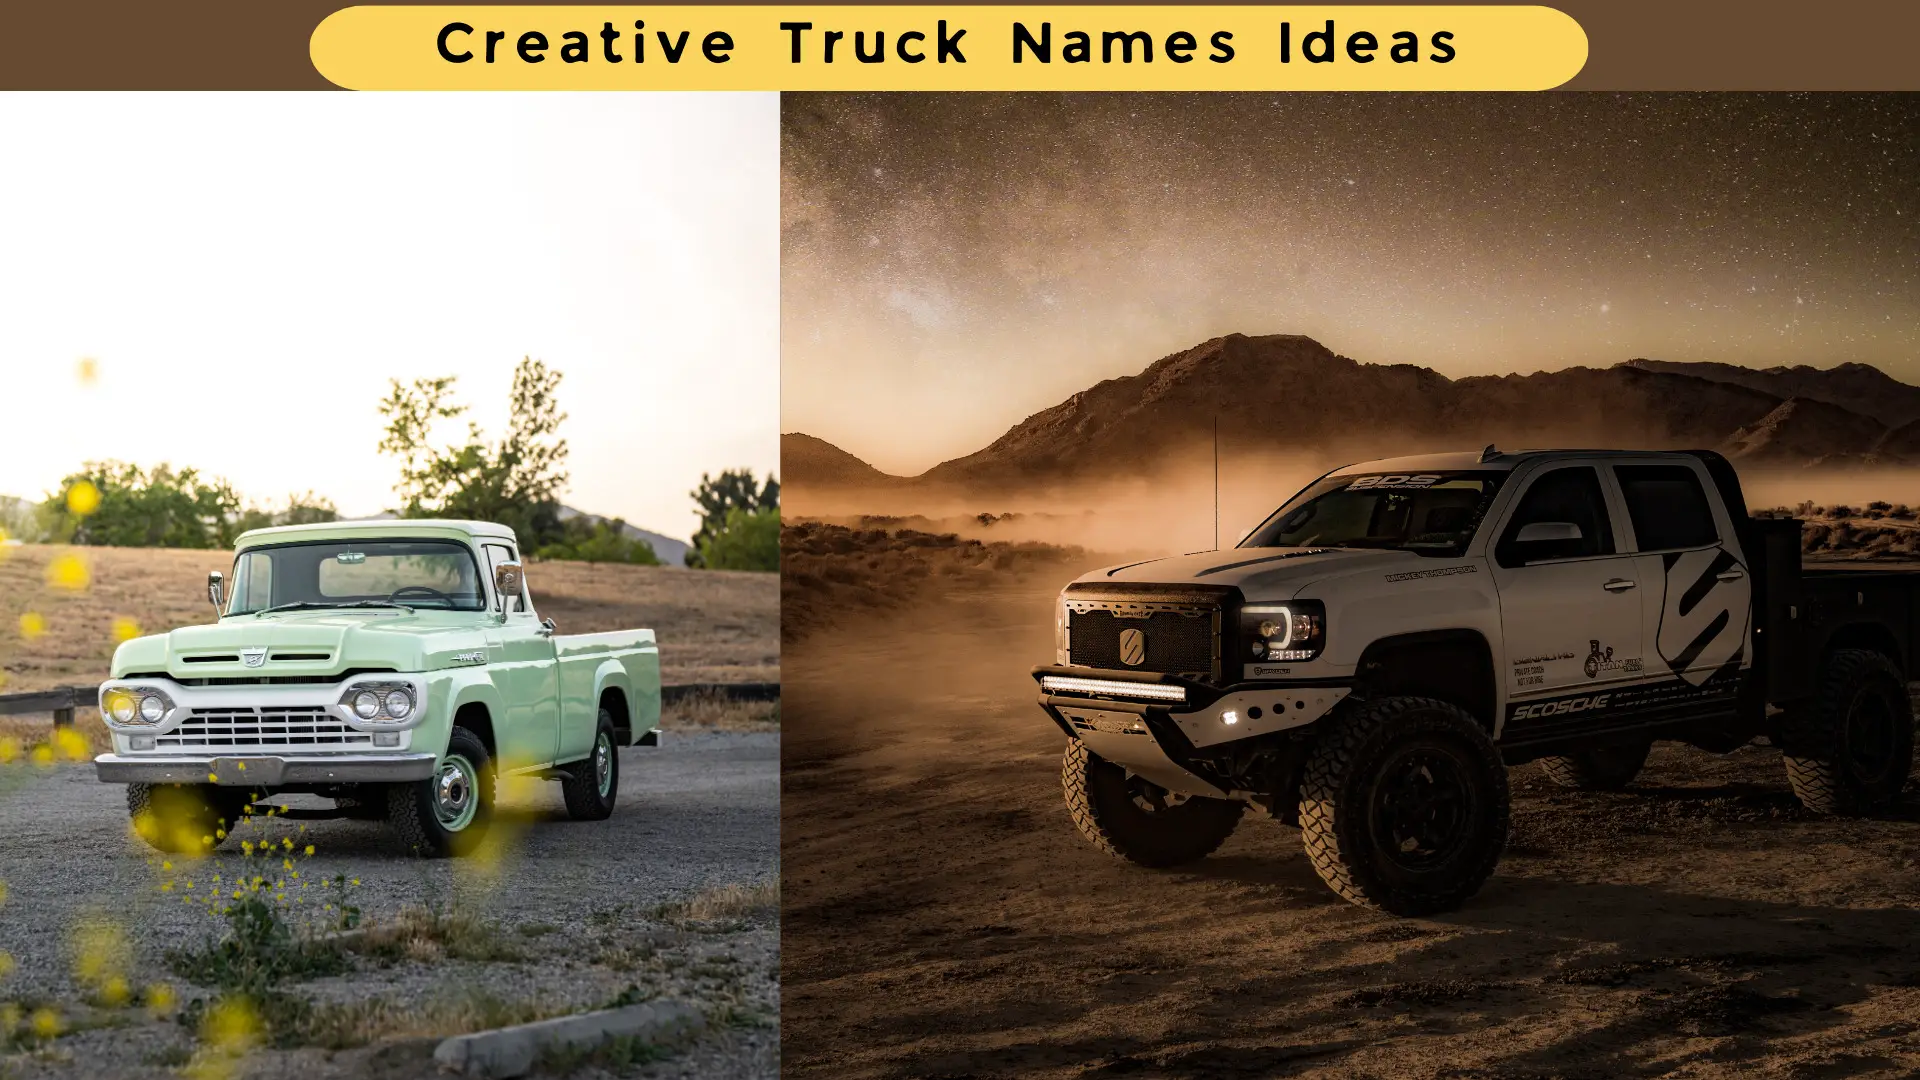 Truck Names